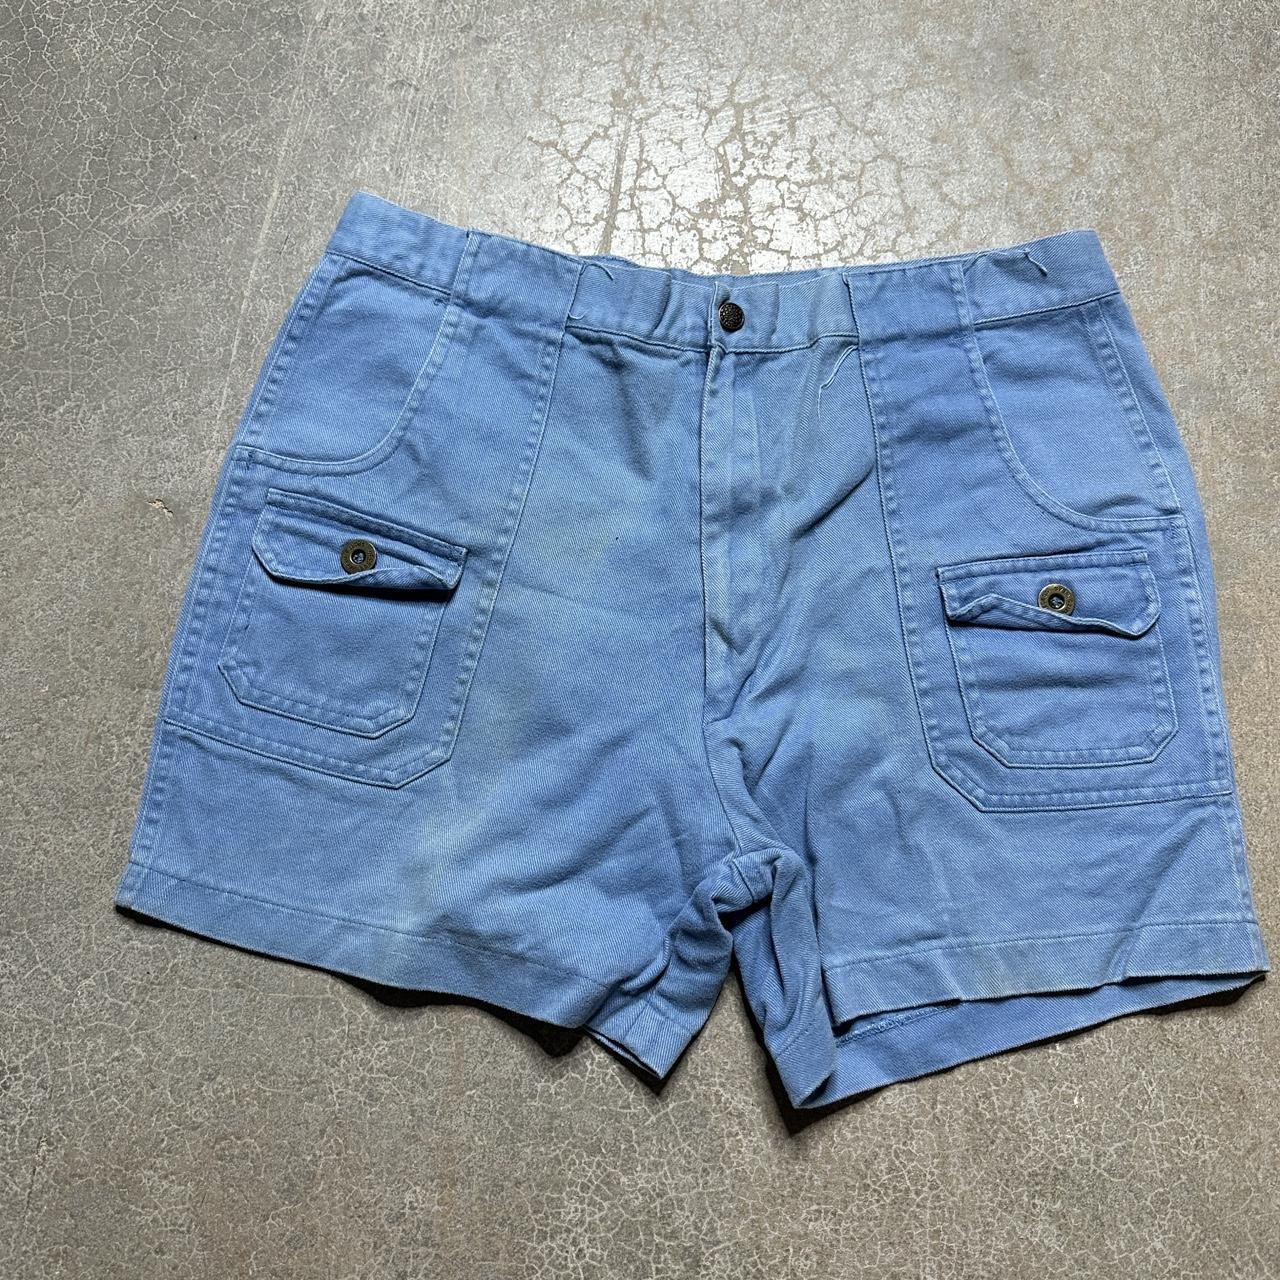 Vintage Blue Shorts free shipping! / baby blue /... - Depop